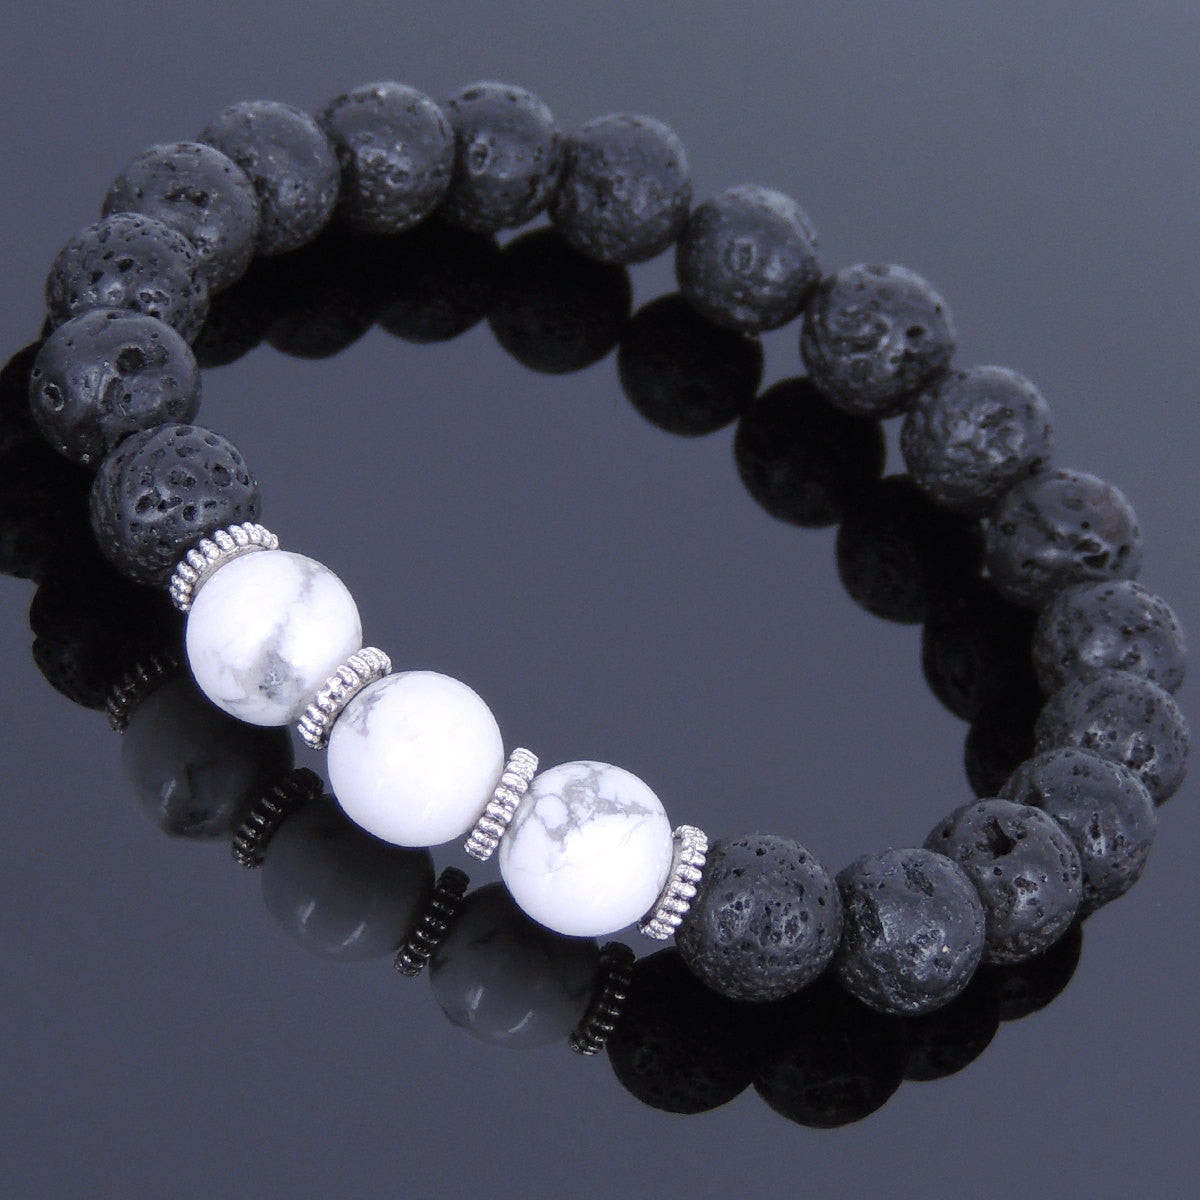 8mm White Howlite & Lava Rock Healing Gemstone Bracelet with Tibetan Silver Spacers - Handmade by Gem & Silver TSB015